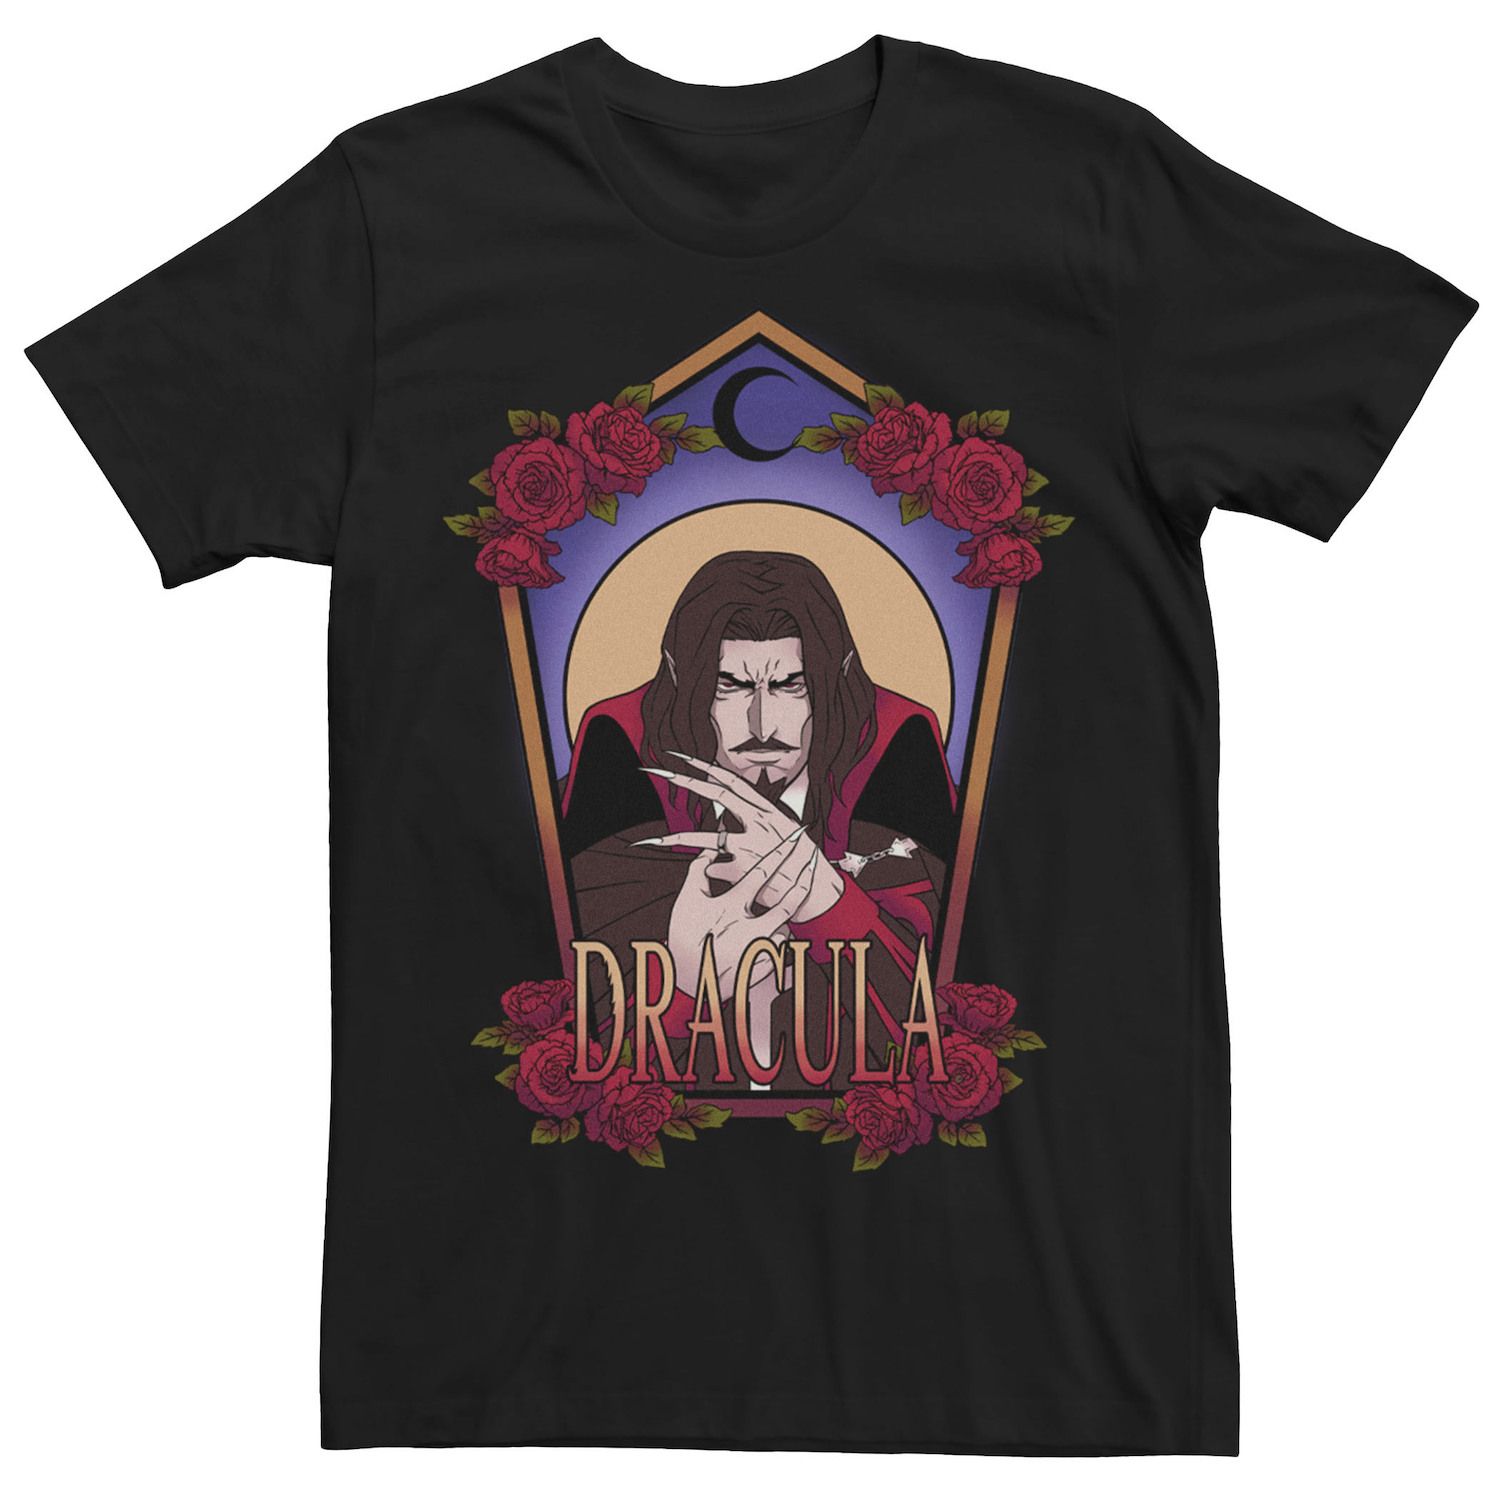 Мужская футболка Netflix Castlevania Dracula с цветочным портретом и портретом Licensed Character